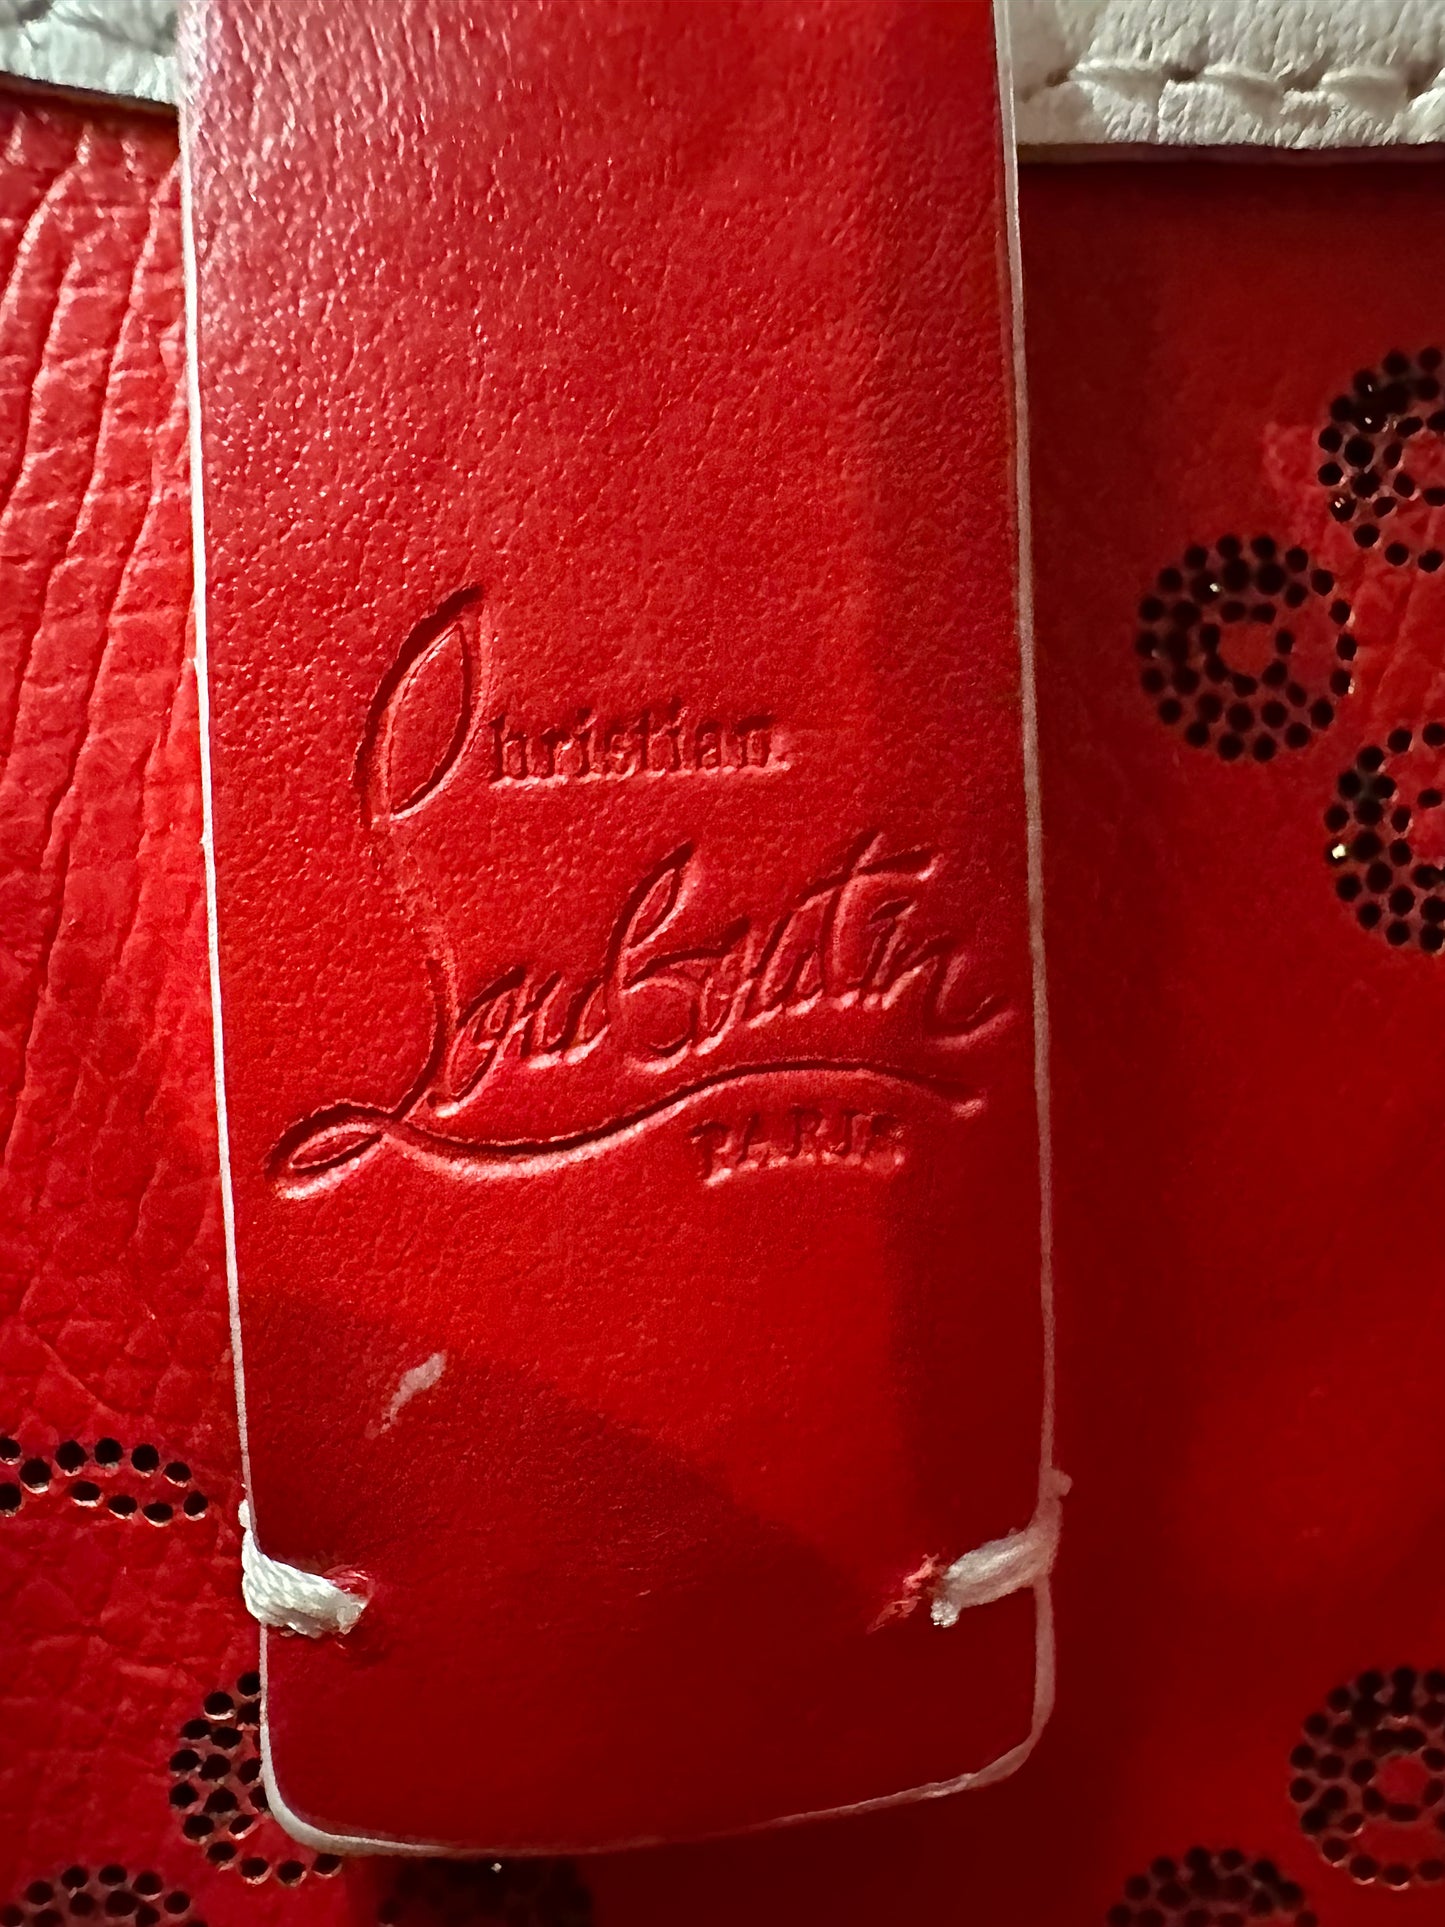 "Christian Louboutin Paris" inside purse. White scuff mark below signature